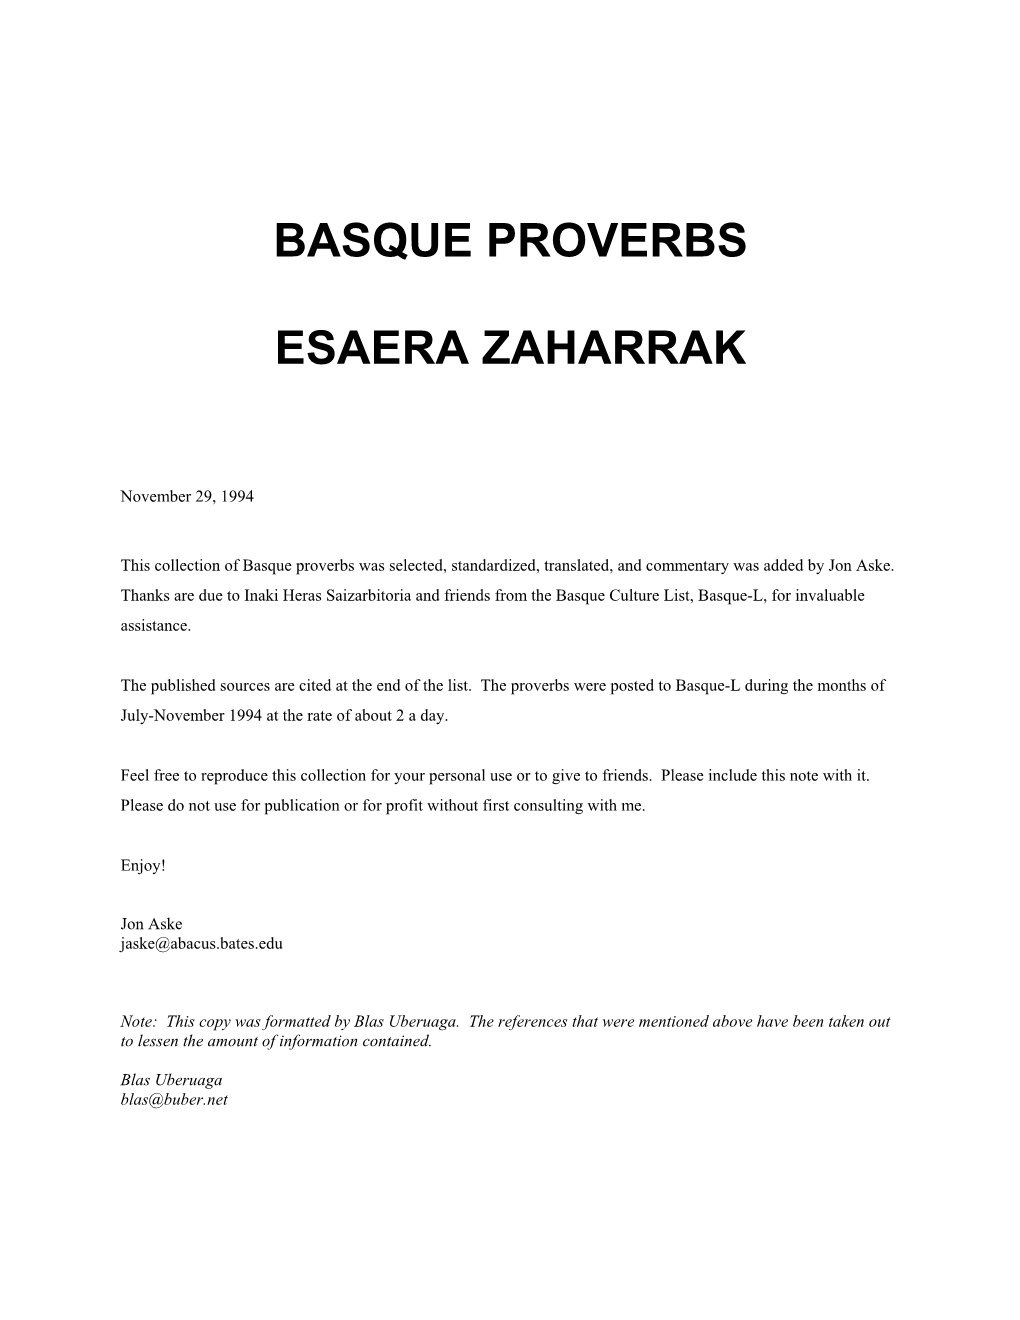 Basque Proverbs Esaera Zaharrak